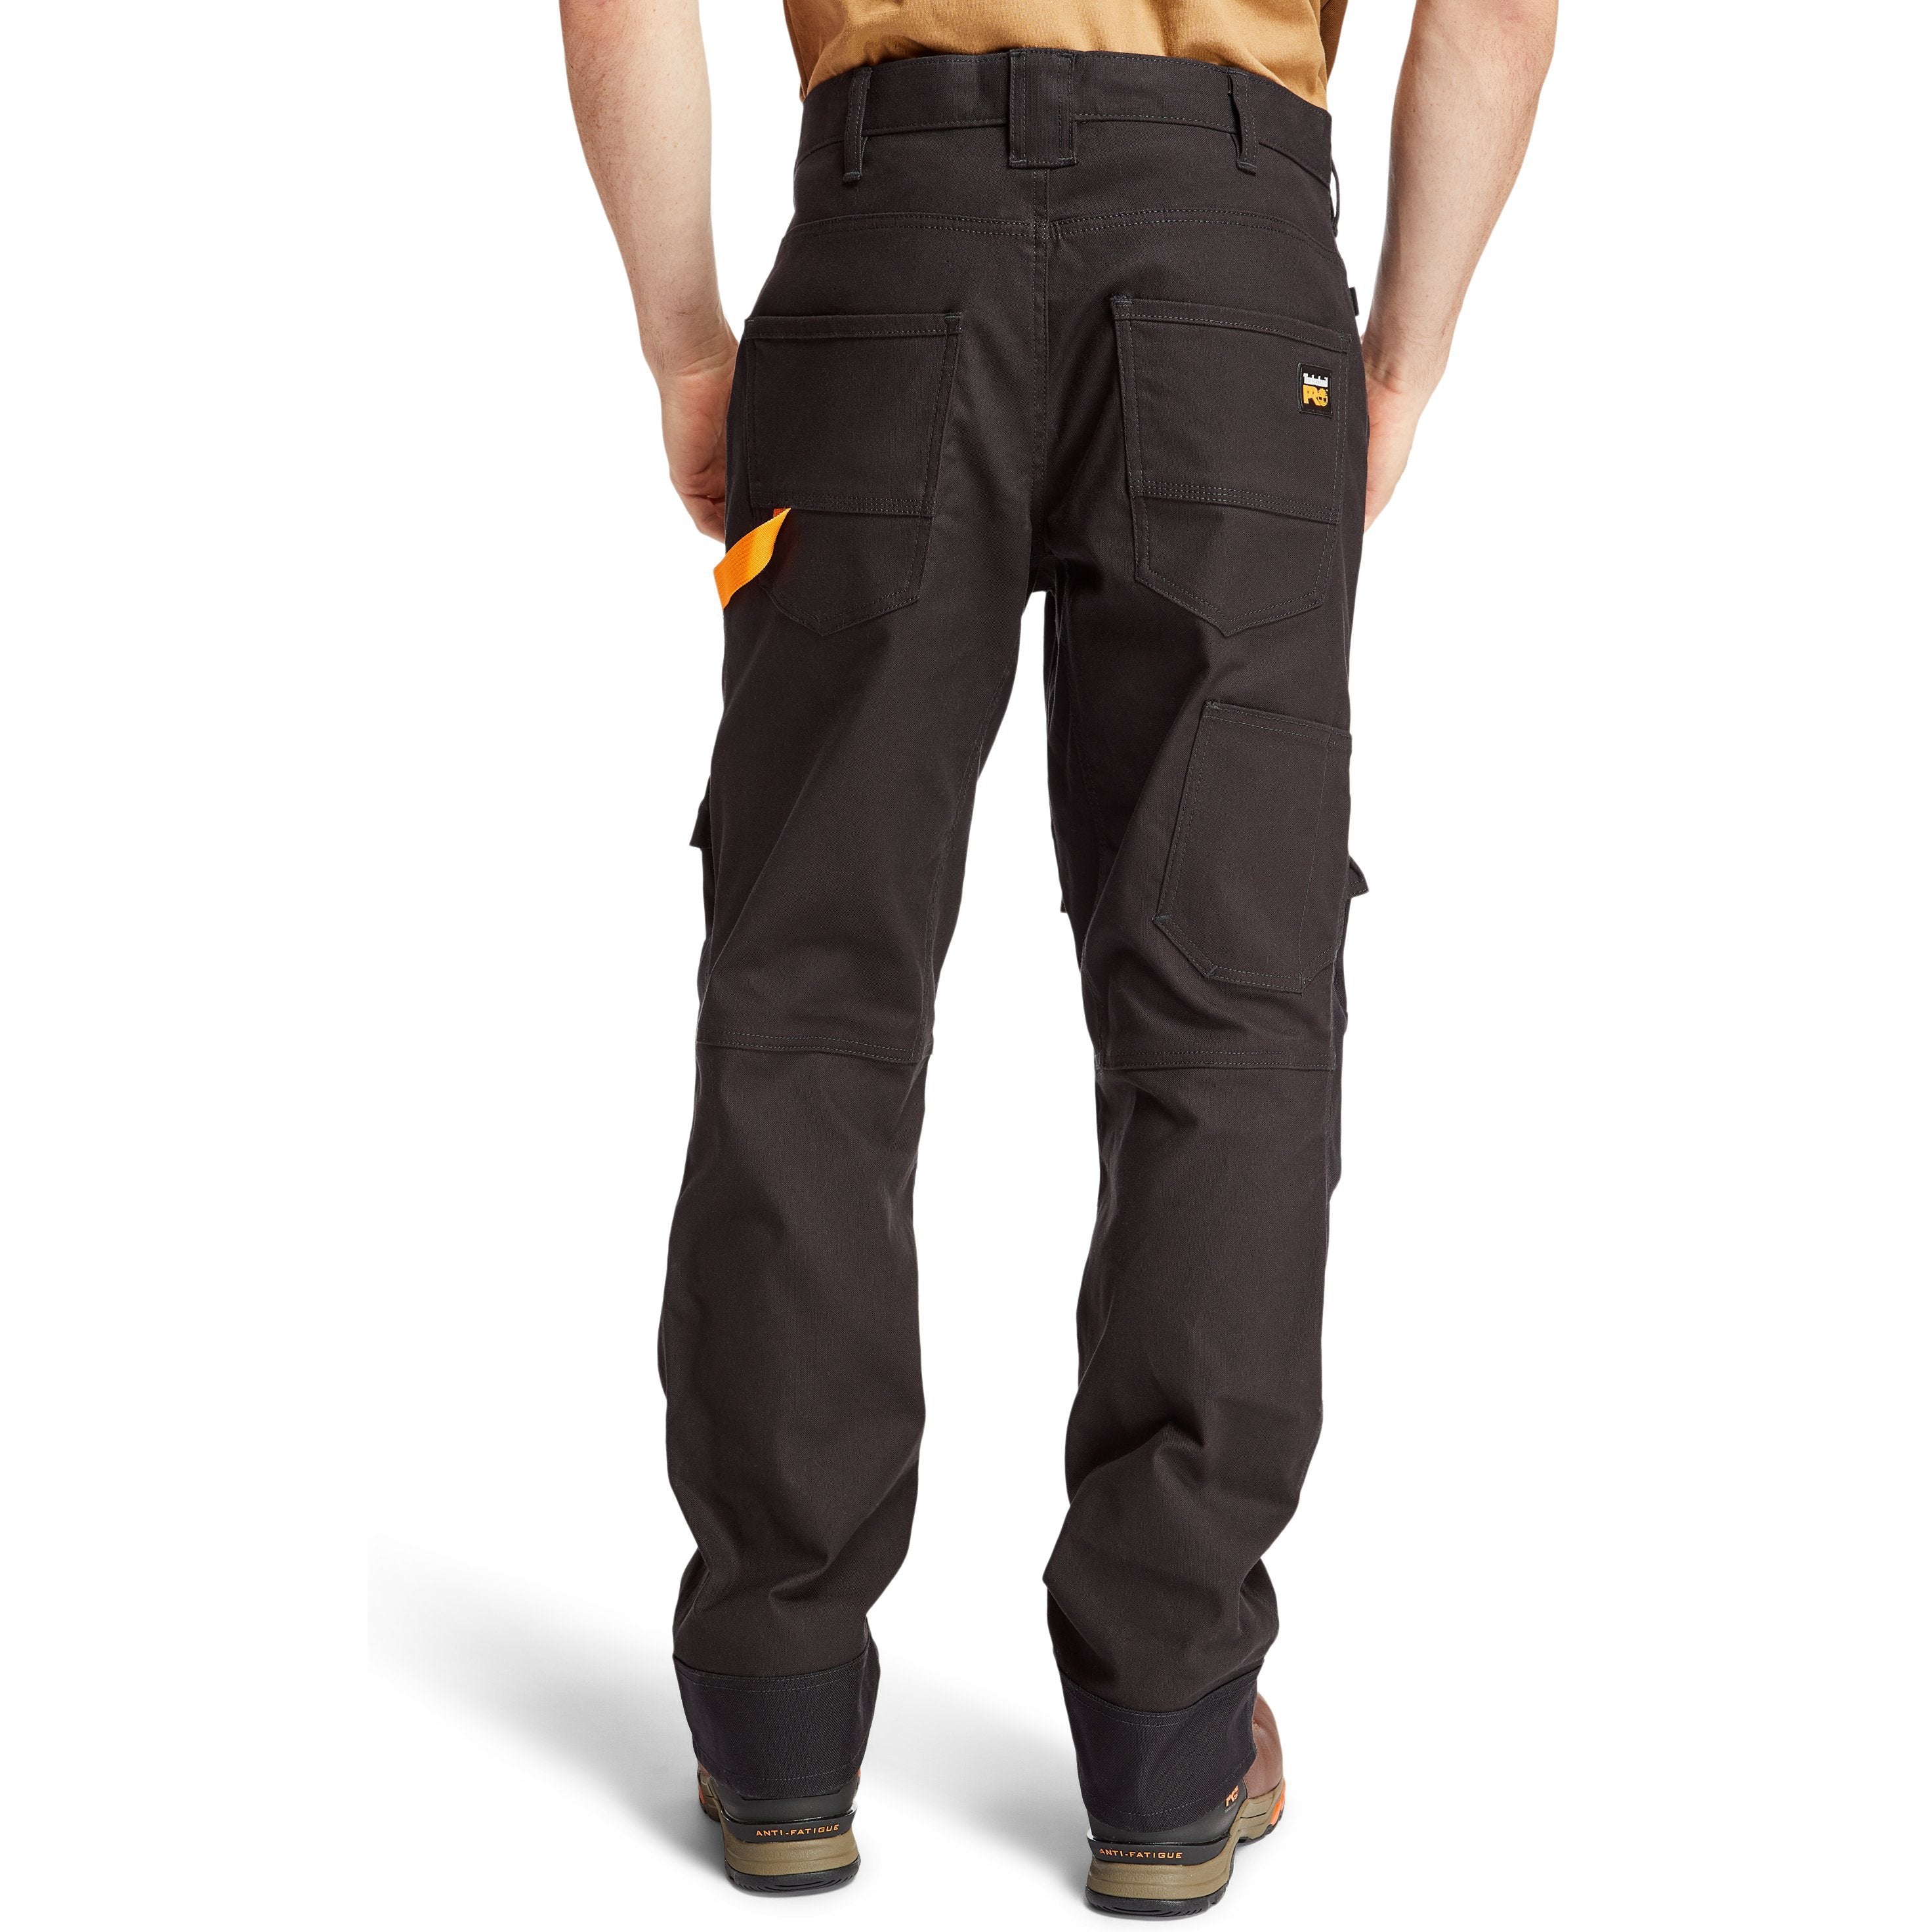 Timberland Pro Morphix Trousers - Sale Items from Garment Graphixs UK